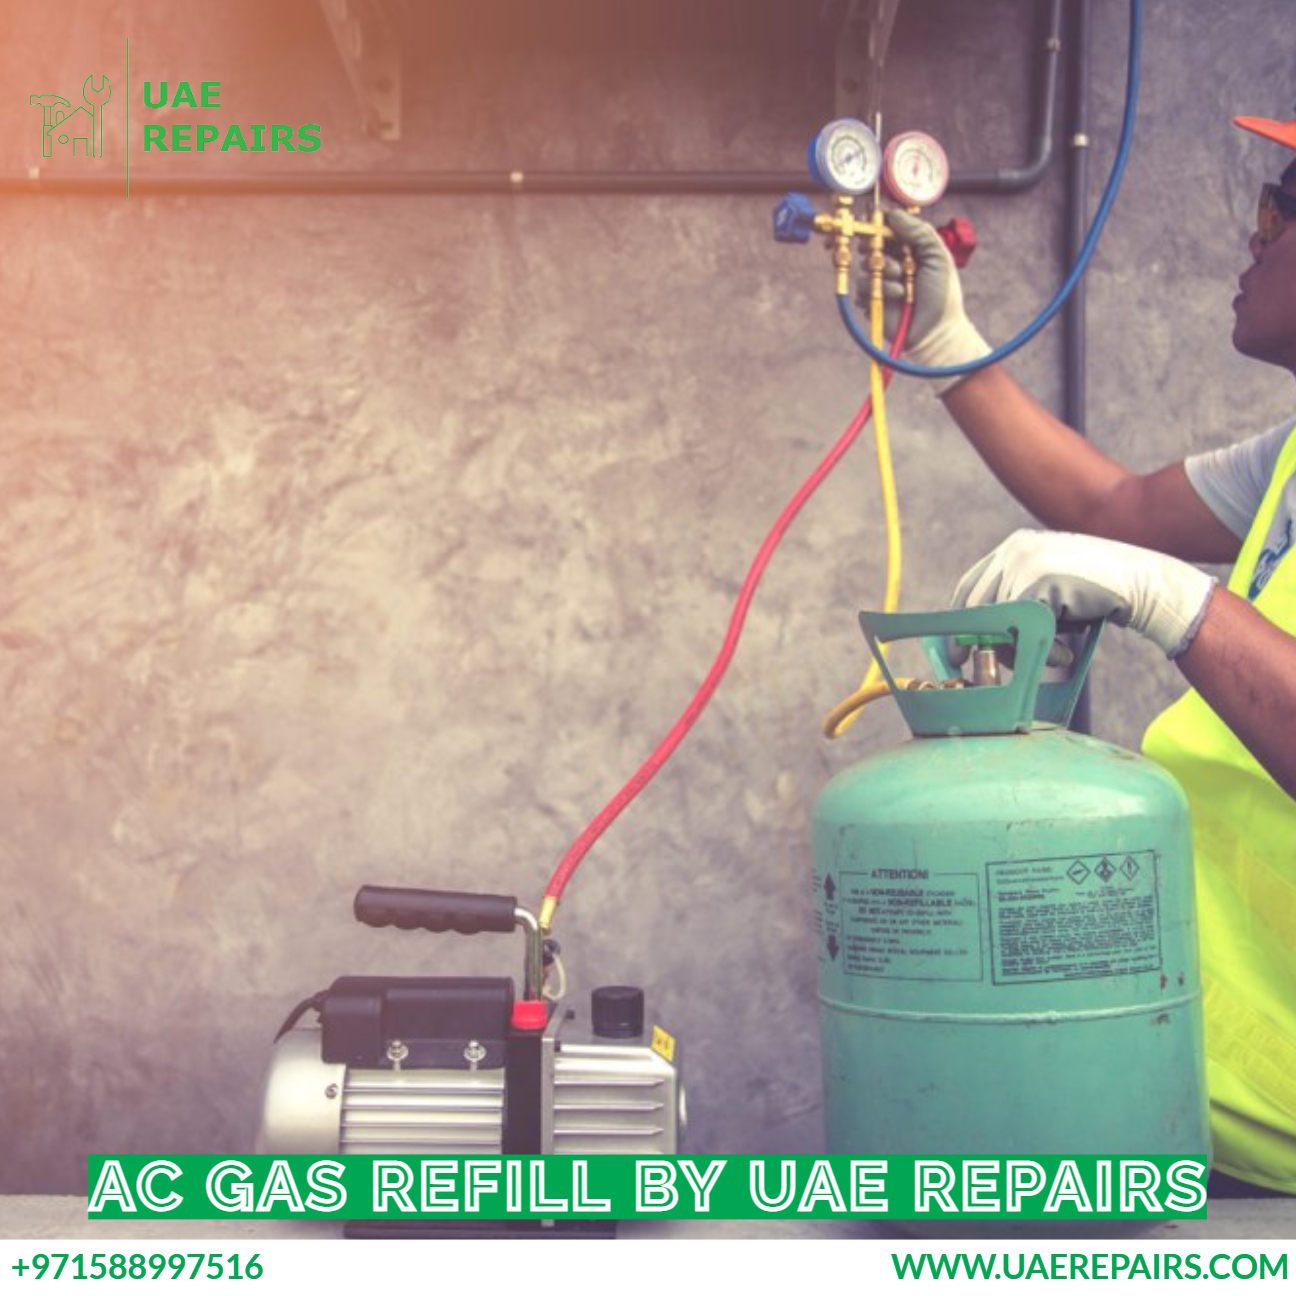 AC GAS REFILL BY UAE REPAIRS